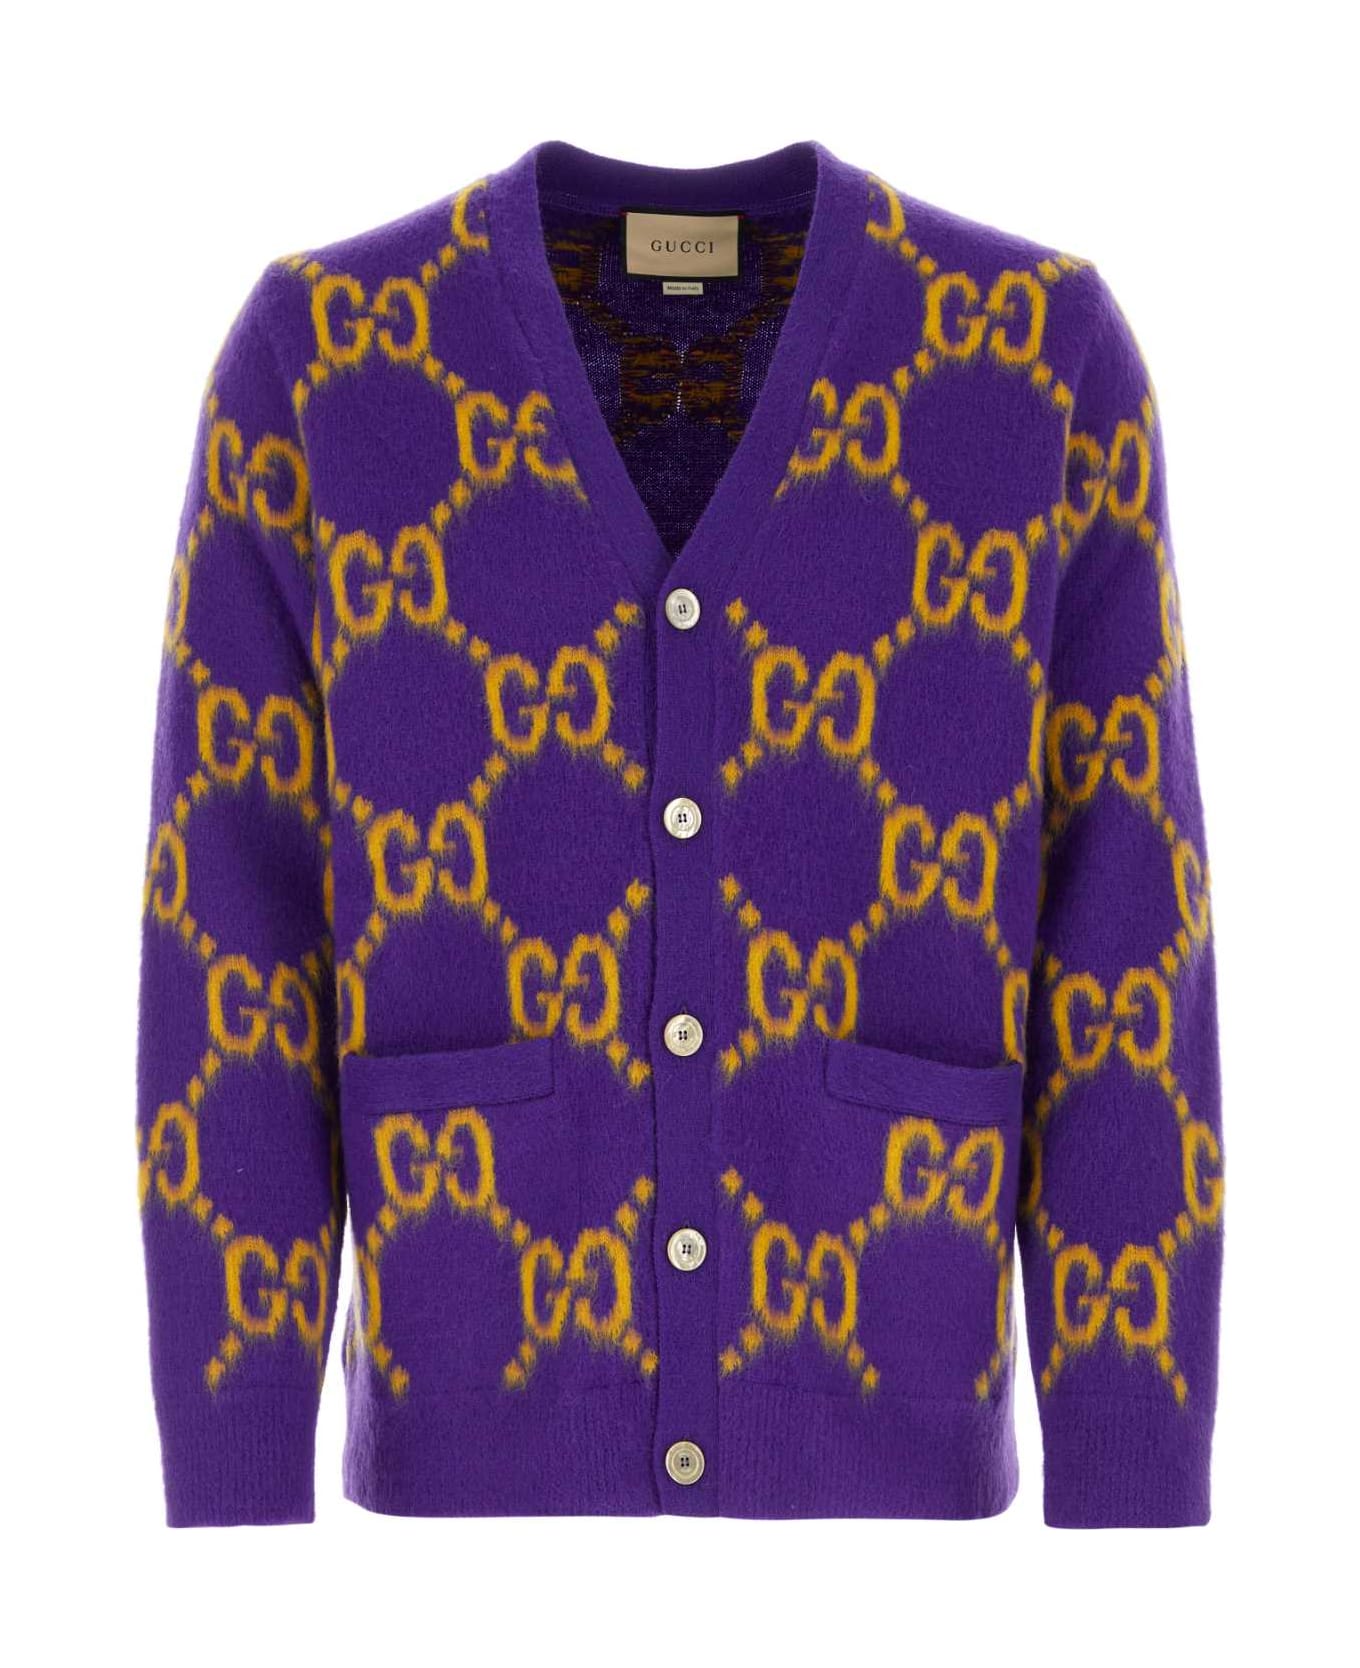 Gucci Embroidered Wool Cardigan - PURPLECROP